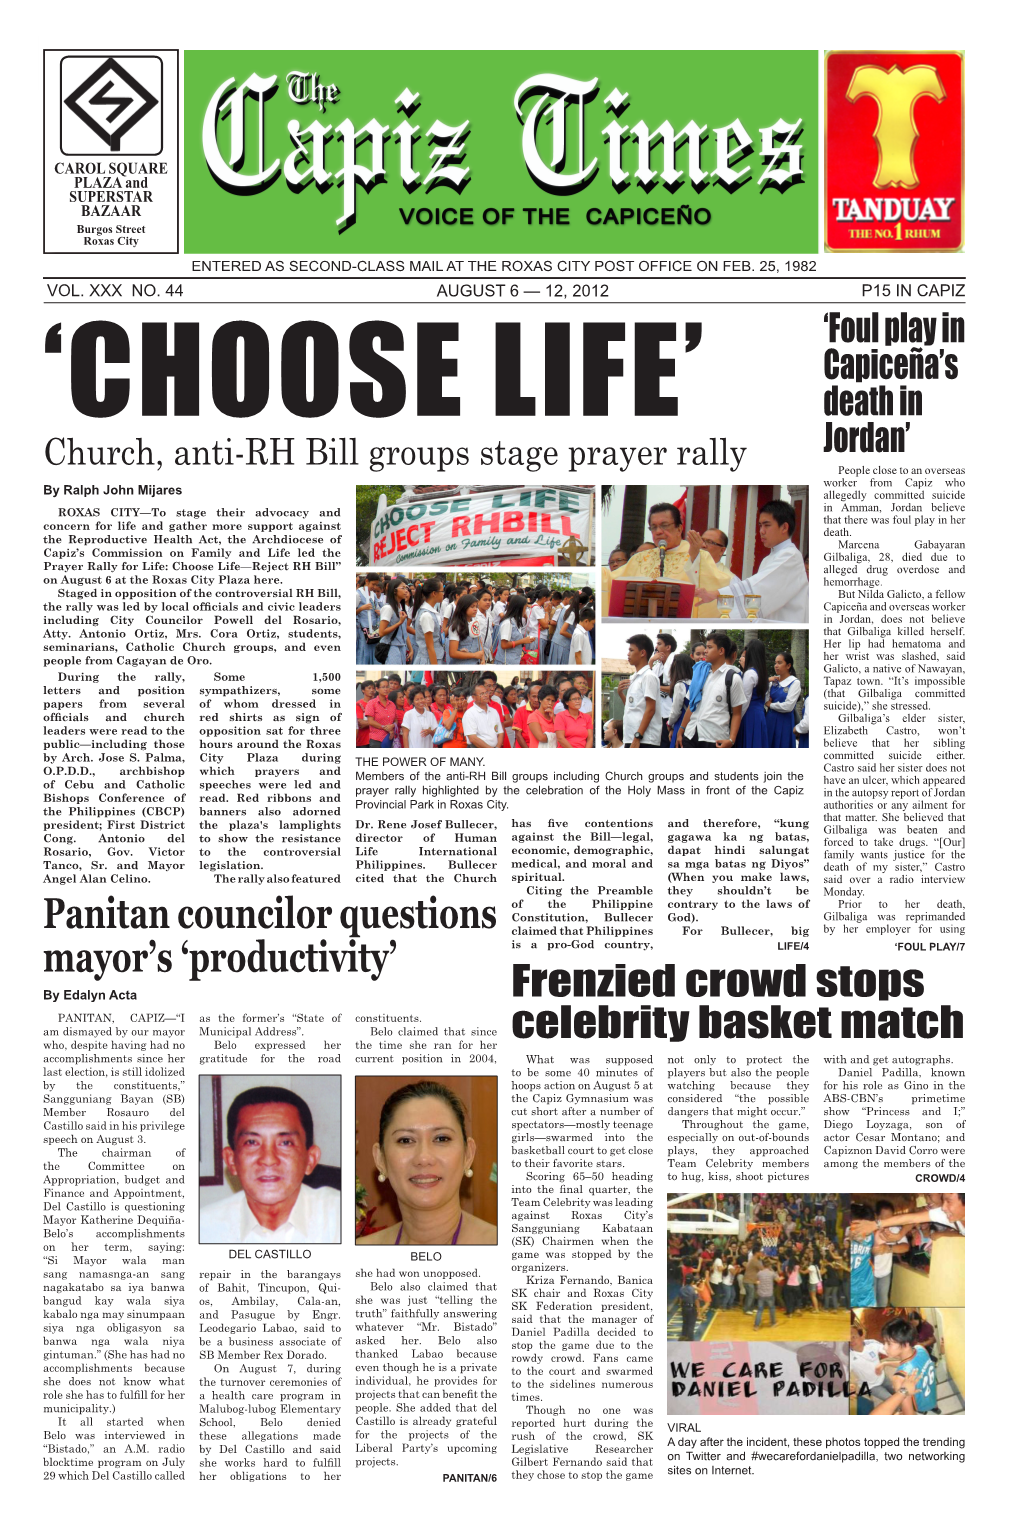 Panitan Councilor Questions Mayor's